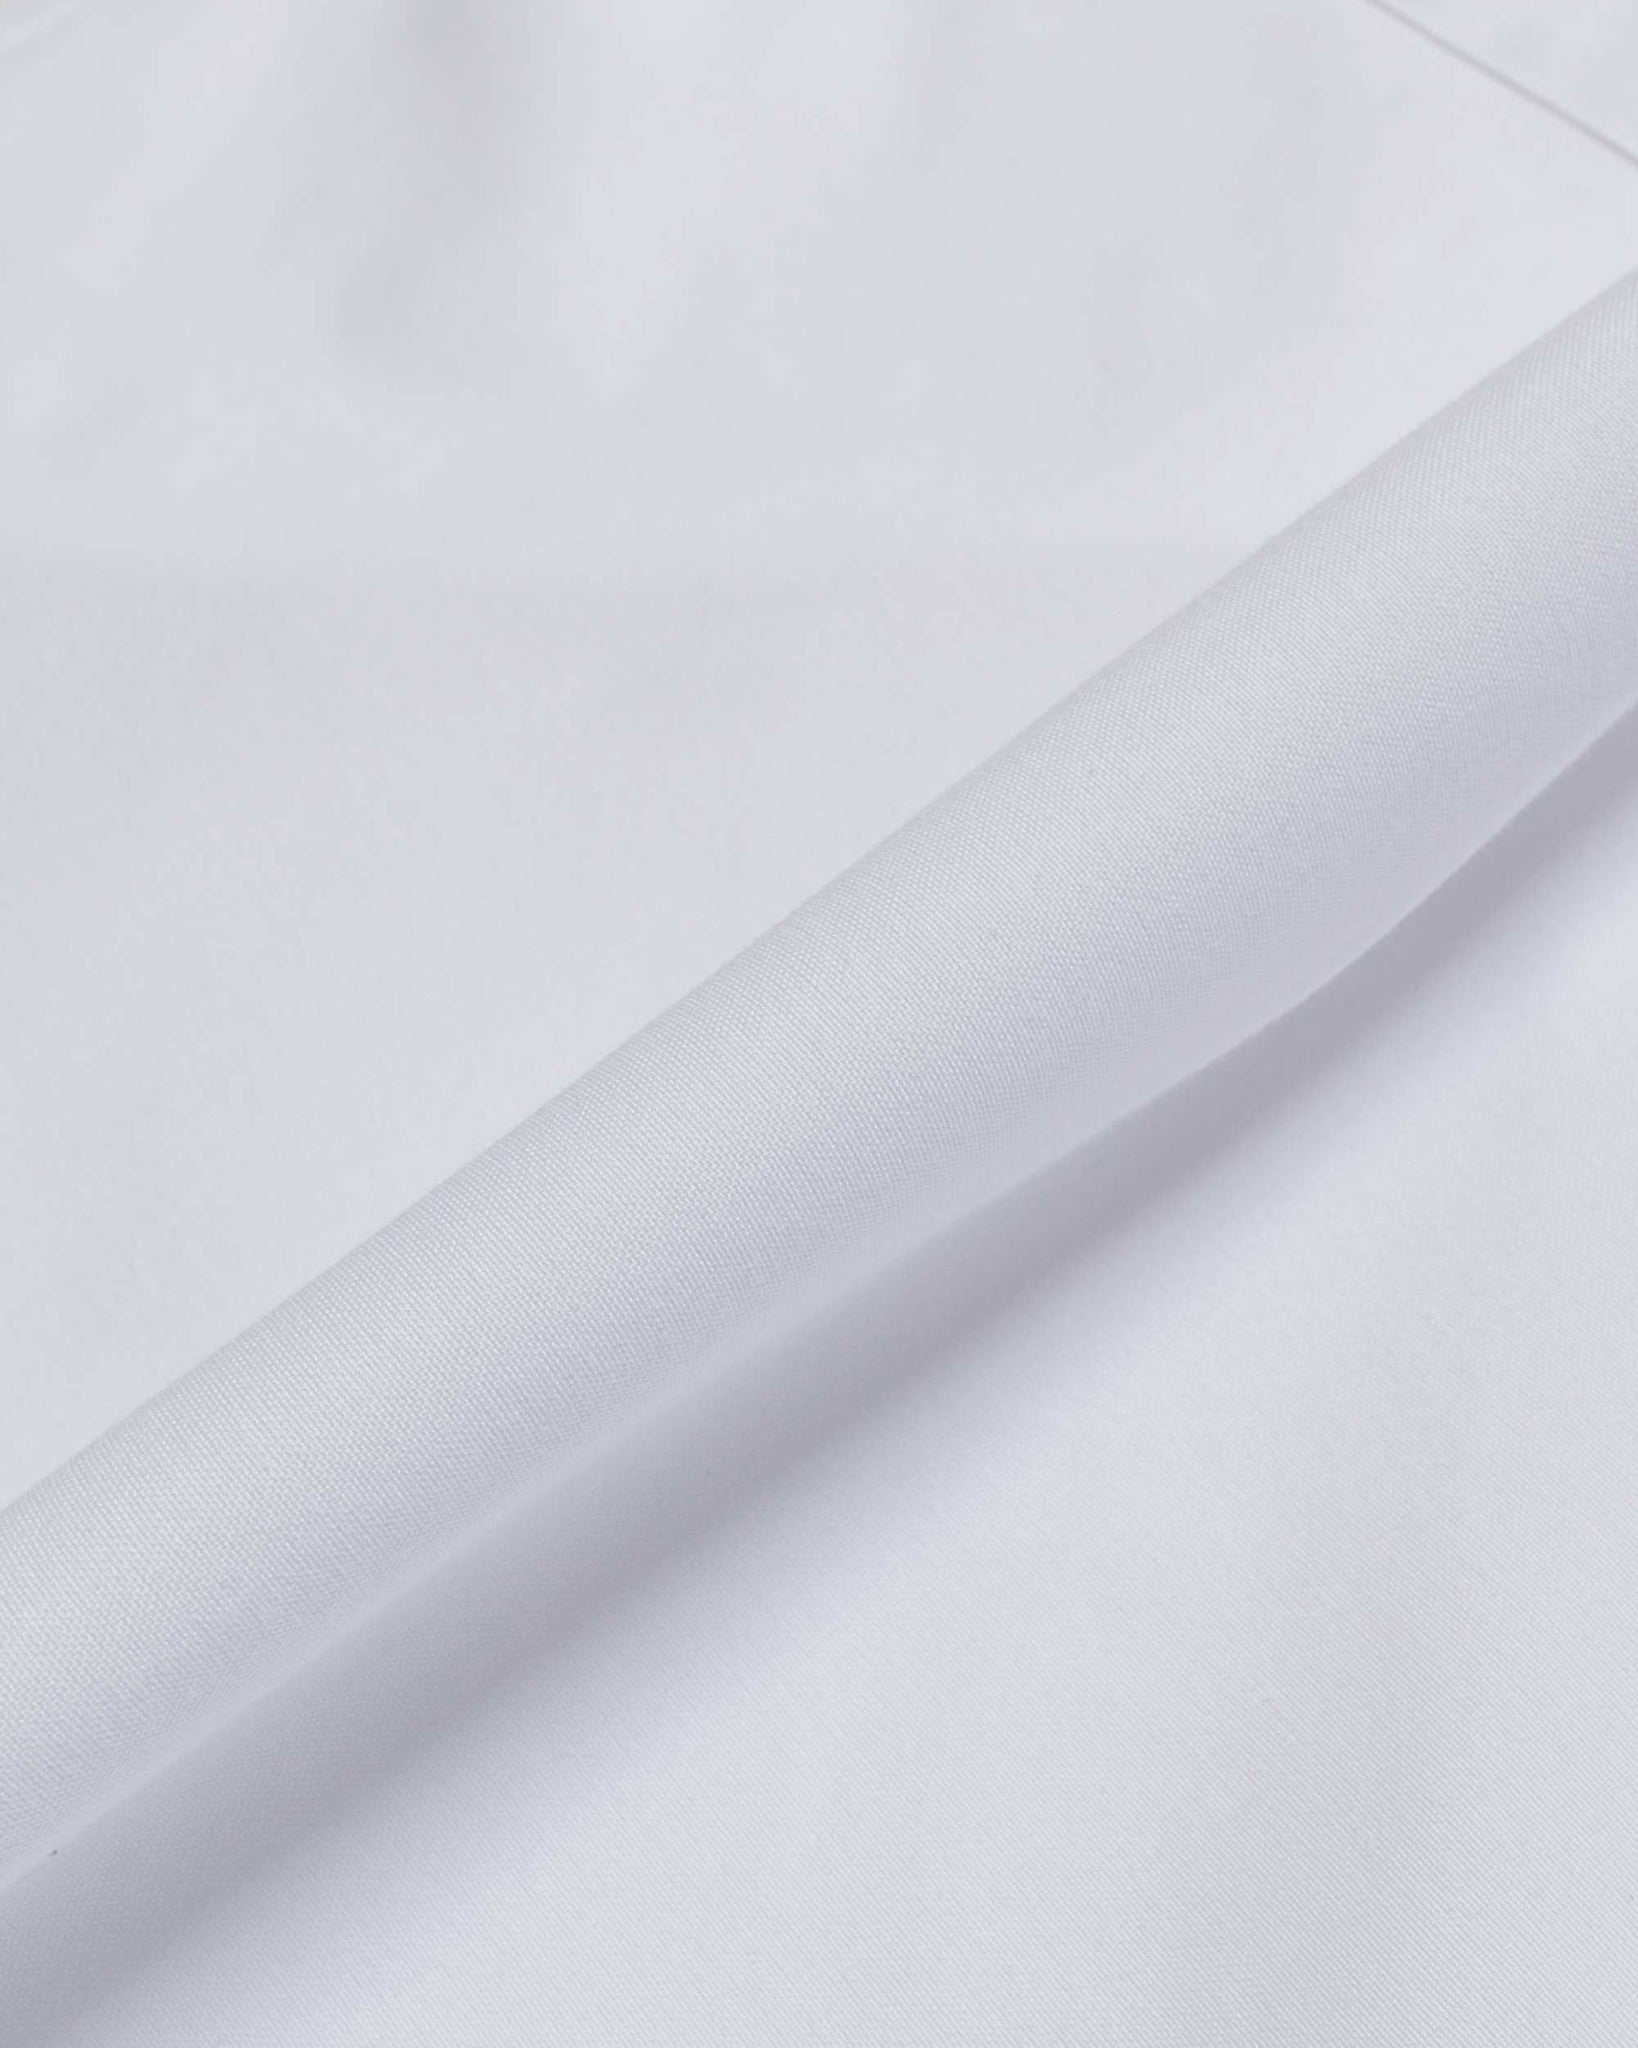 Randy's Garments Utility Shirt 6040 Solid Oxford Cloth White fabric